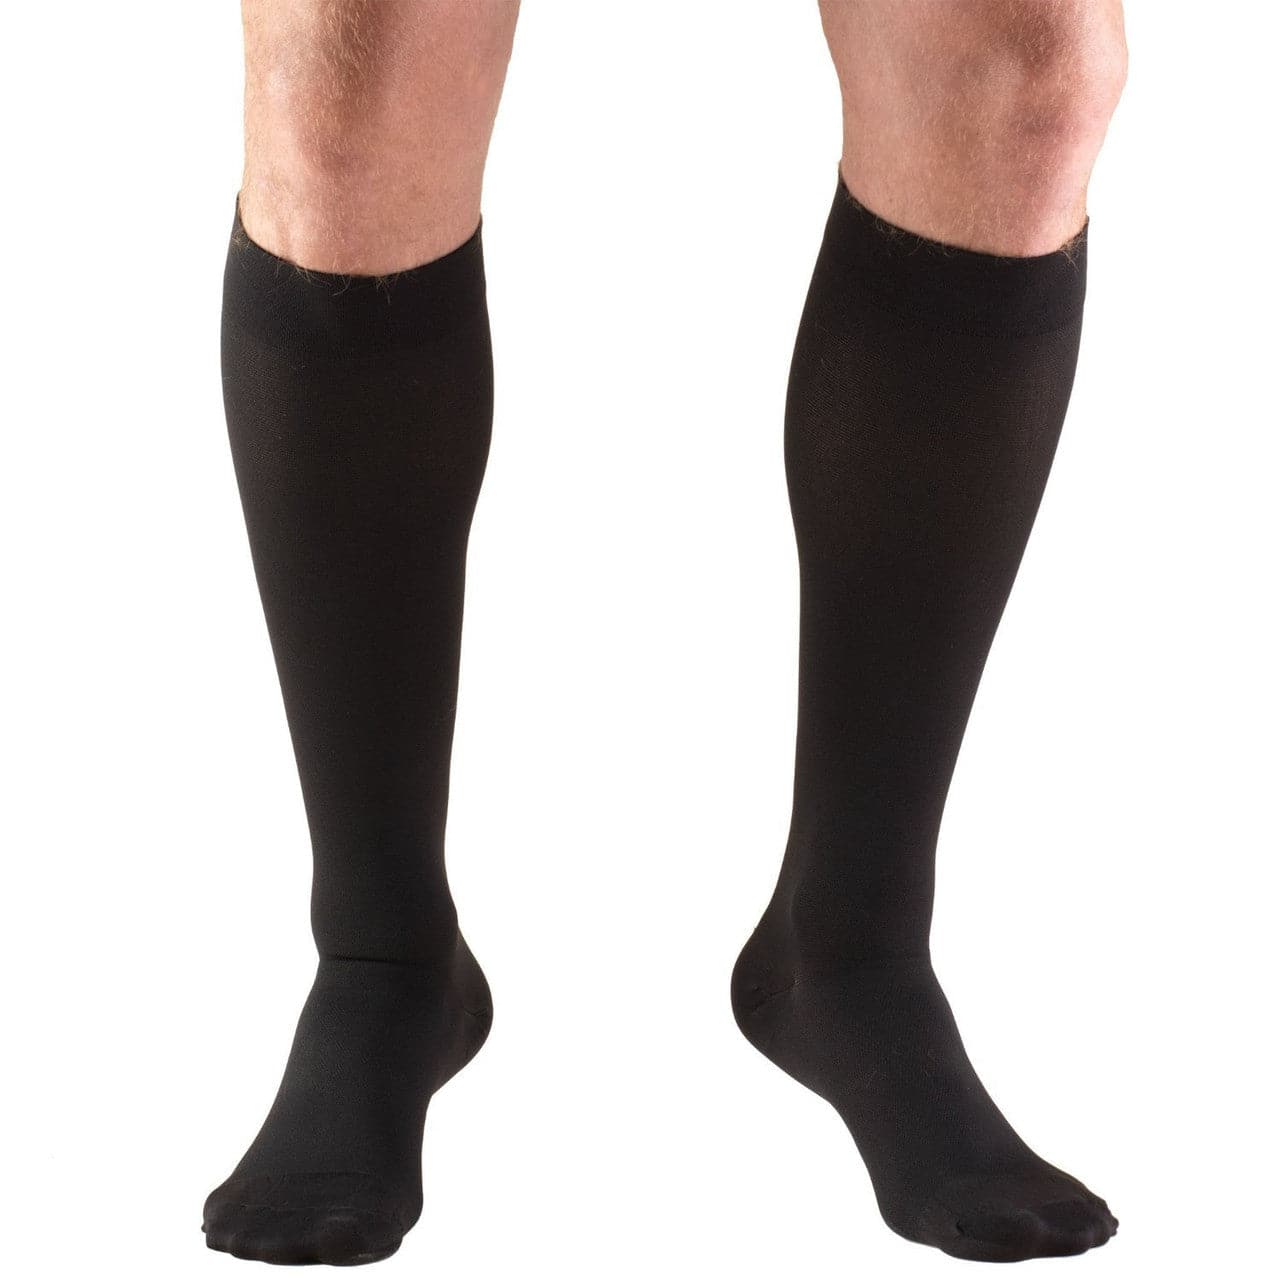 Truform 30-40 mmHg Closed Toe Thigh High Compression Stockings, Beige (Men  & Women)